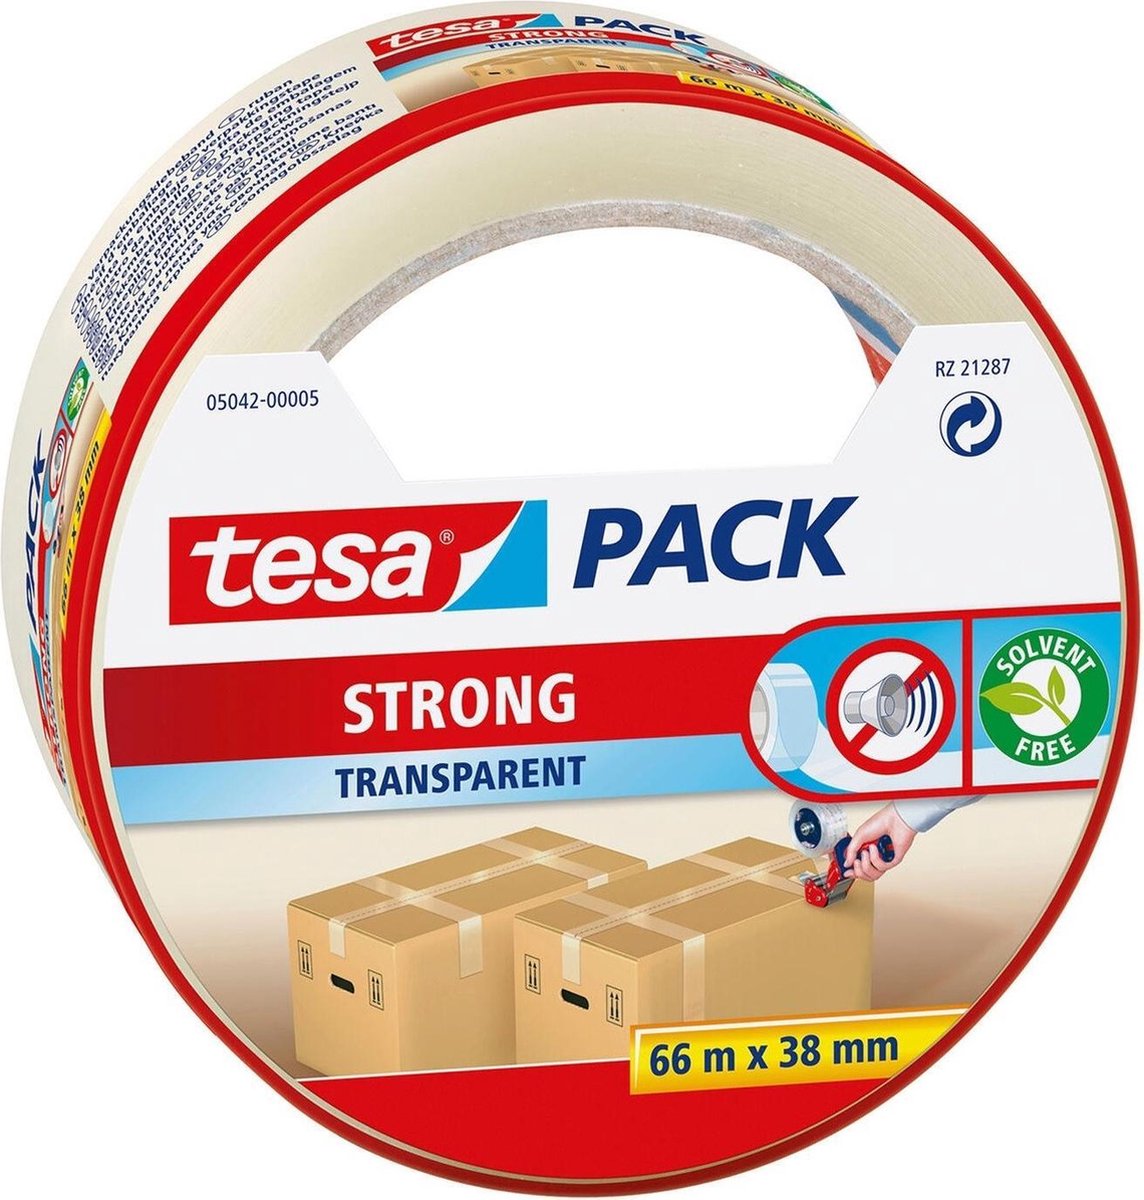 3x Tesa verpakkingstape transparant 66 mtr x 38 mm - Klusmateriaal - Verpakkingsmateriaal - Inpakmateriaal - Verpakkingsbenodigdheden - Verpakkingstape/inpaktape - Dozen afsluittape - Tesa